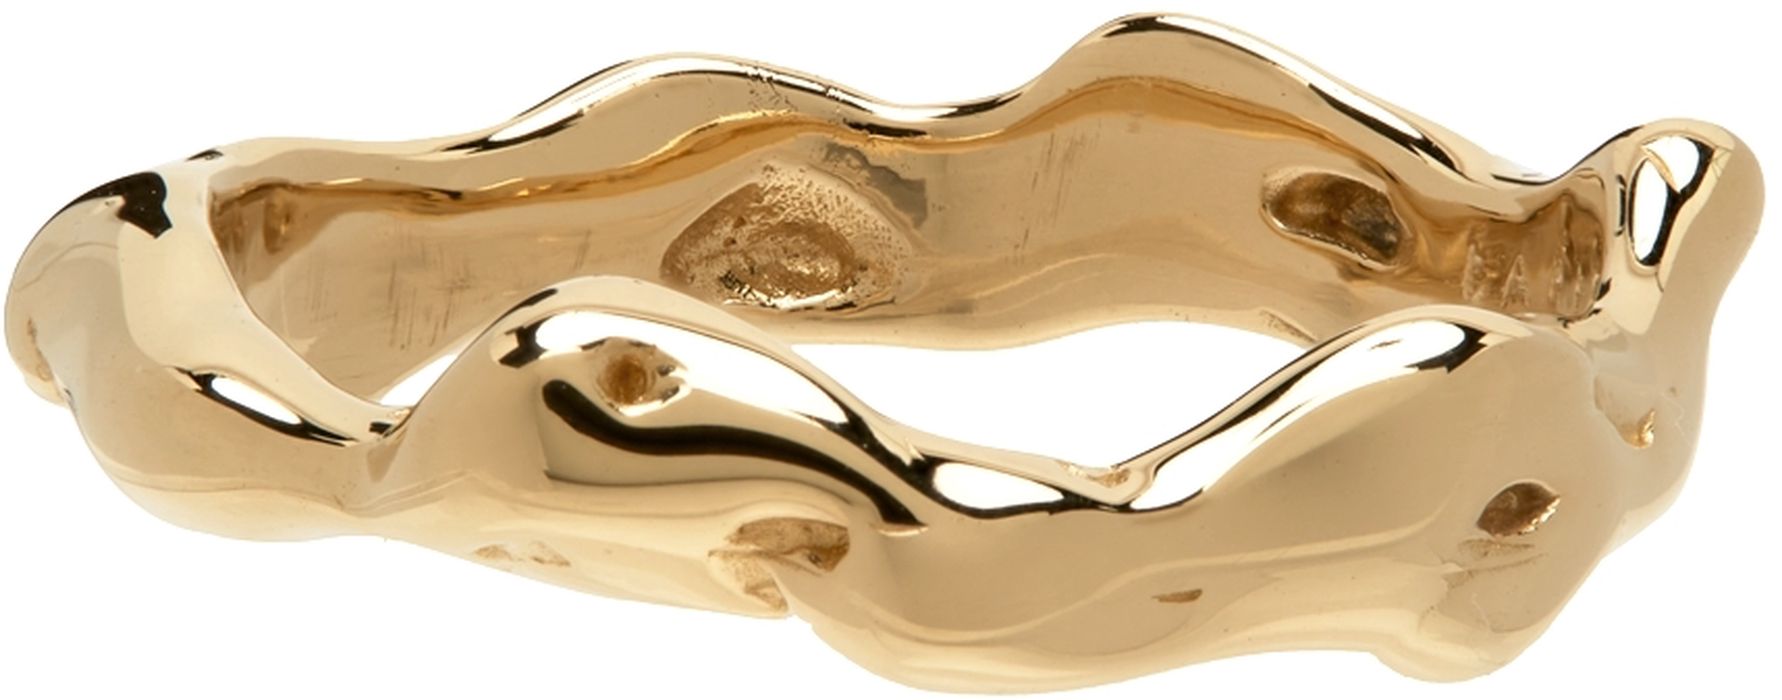 Faris Gold Lava Band Ring